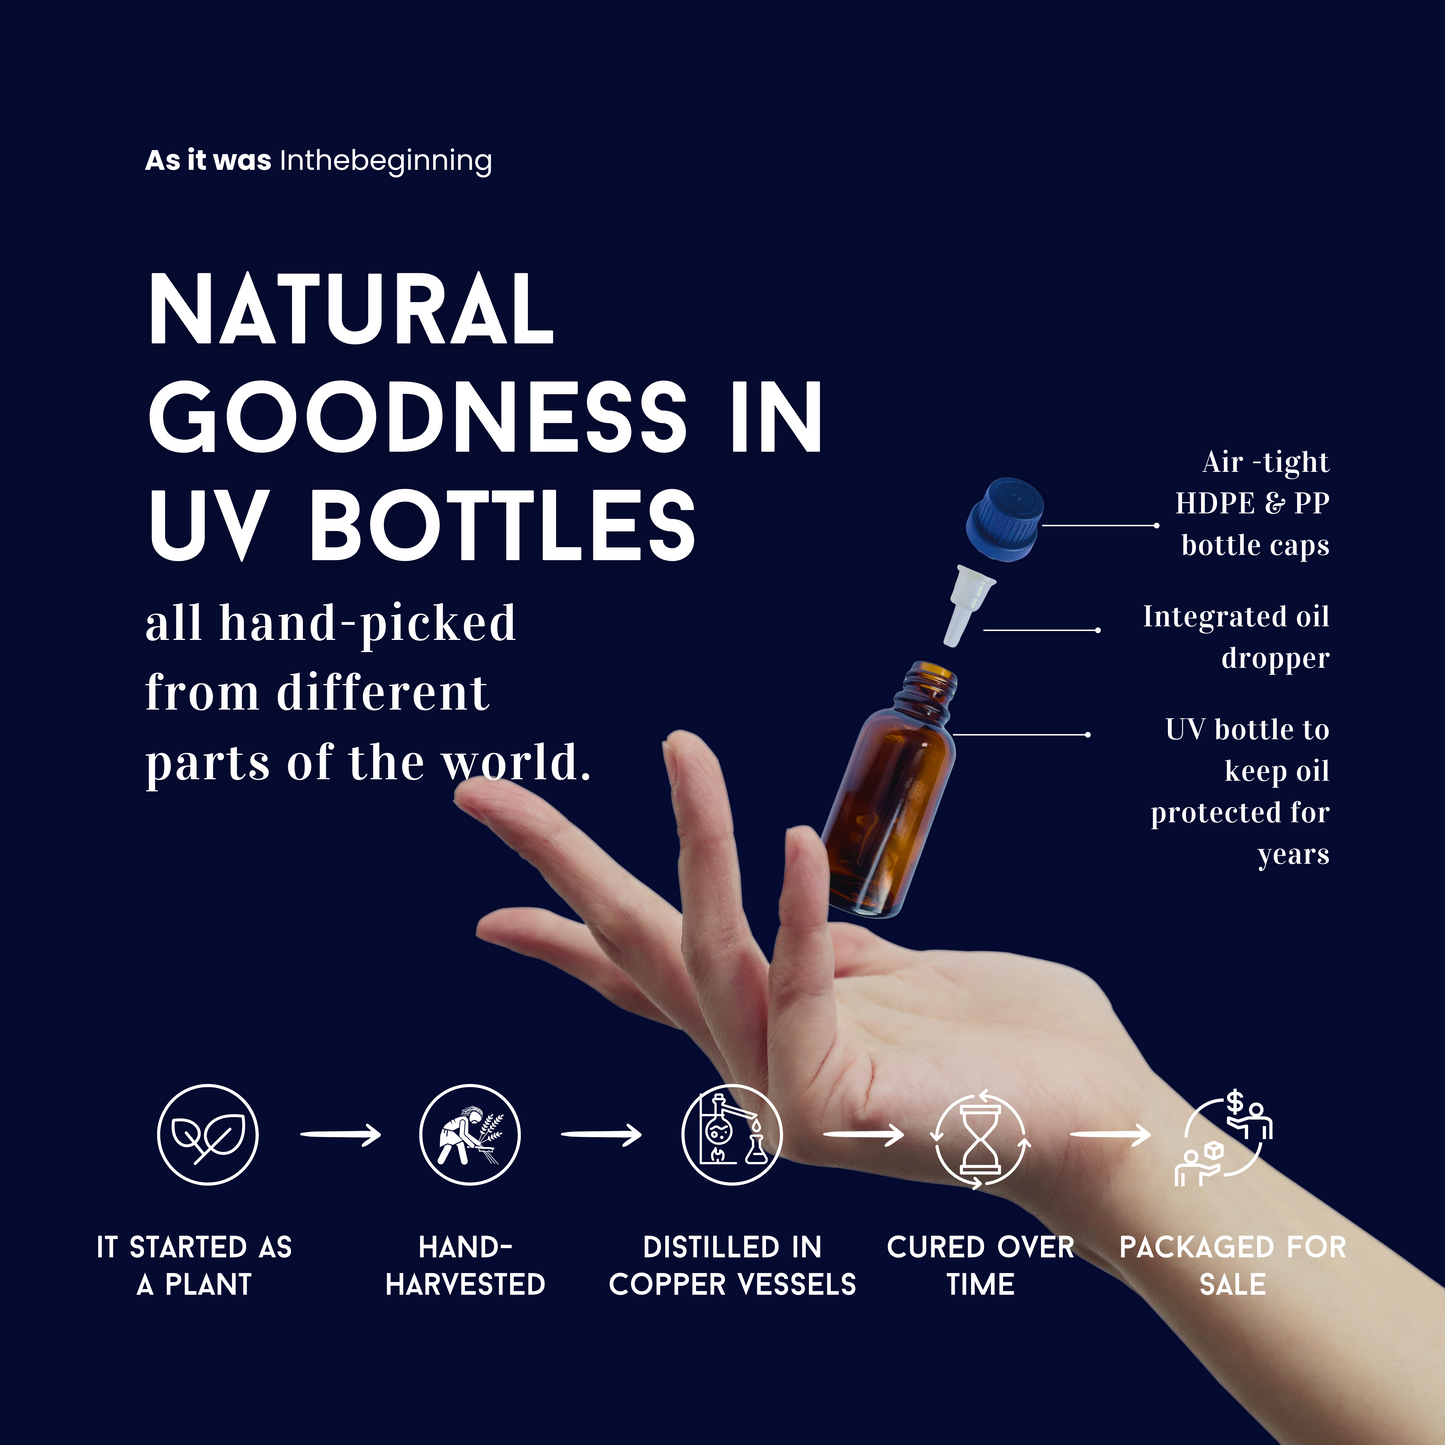 Organic Juniper Berry Essential Oil | 30ml / 1oz UV Bottle | Unblended | Aromatherapy | Vegan | Spirituality| Nature Heals - ITBO Green